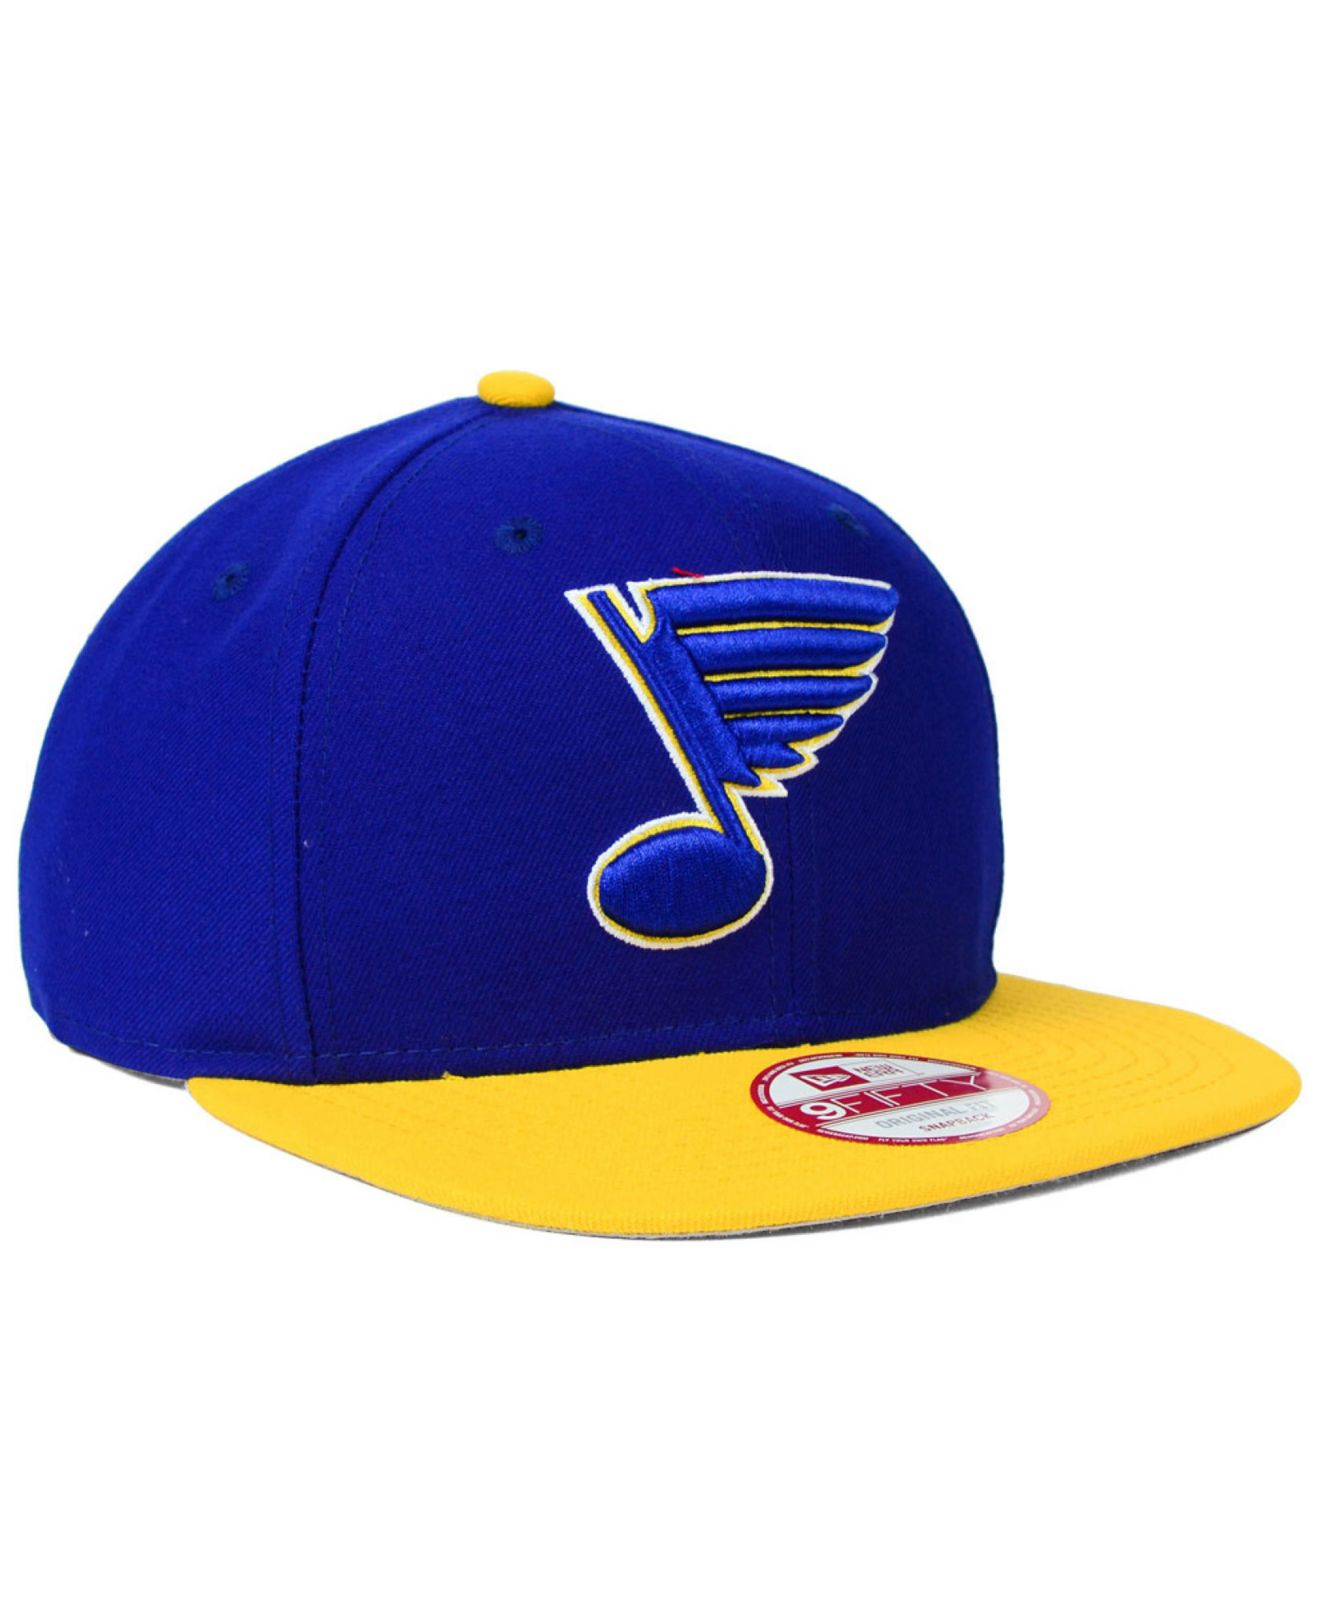 St. Louis Blues Yellow New Era 9fifty Snapback Hat NHL